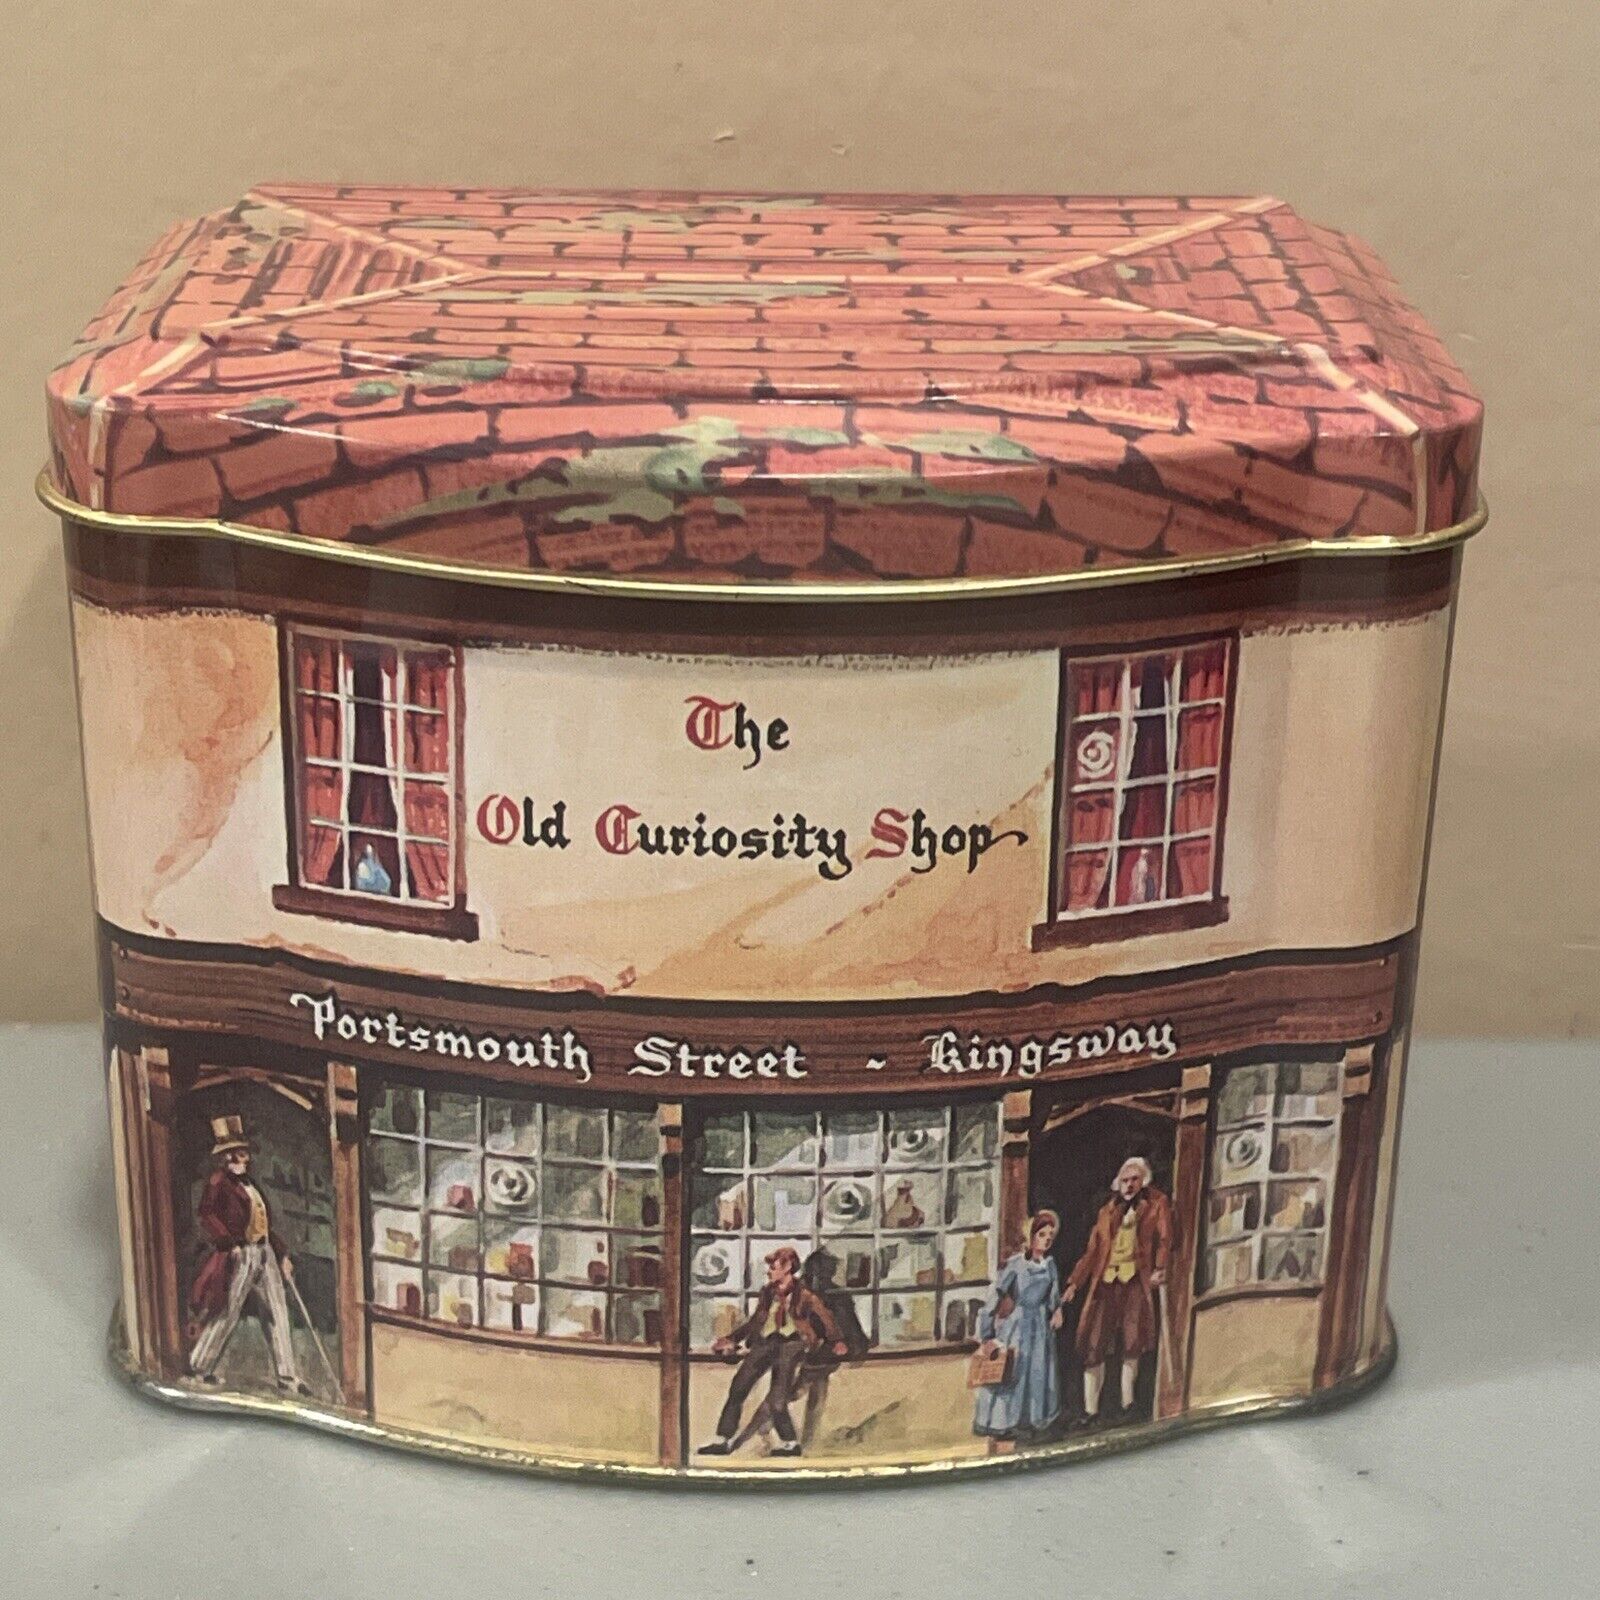 The Old Curiosity Shop Portsmouth St. Kingsway England Vintage Metal Tin